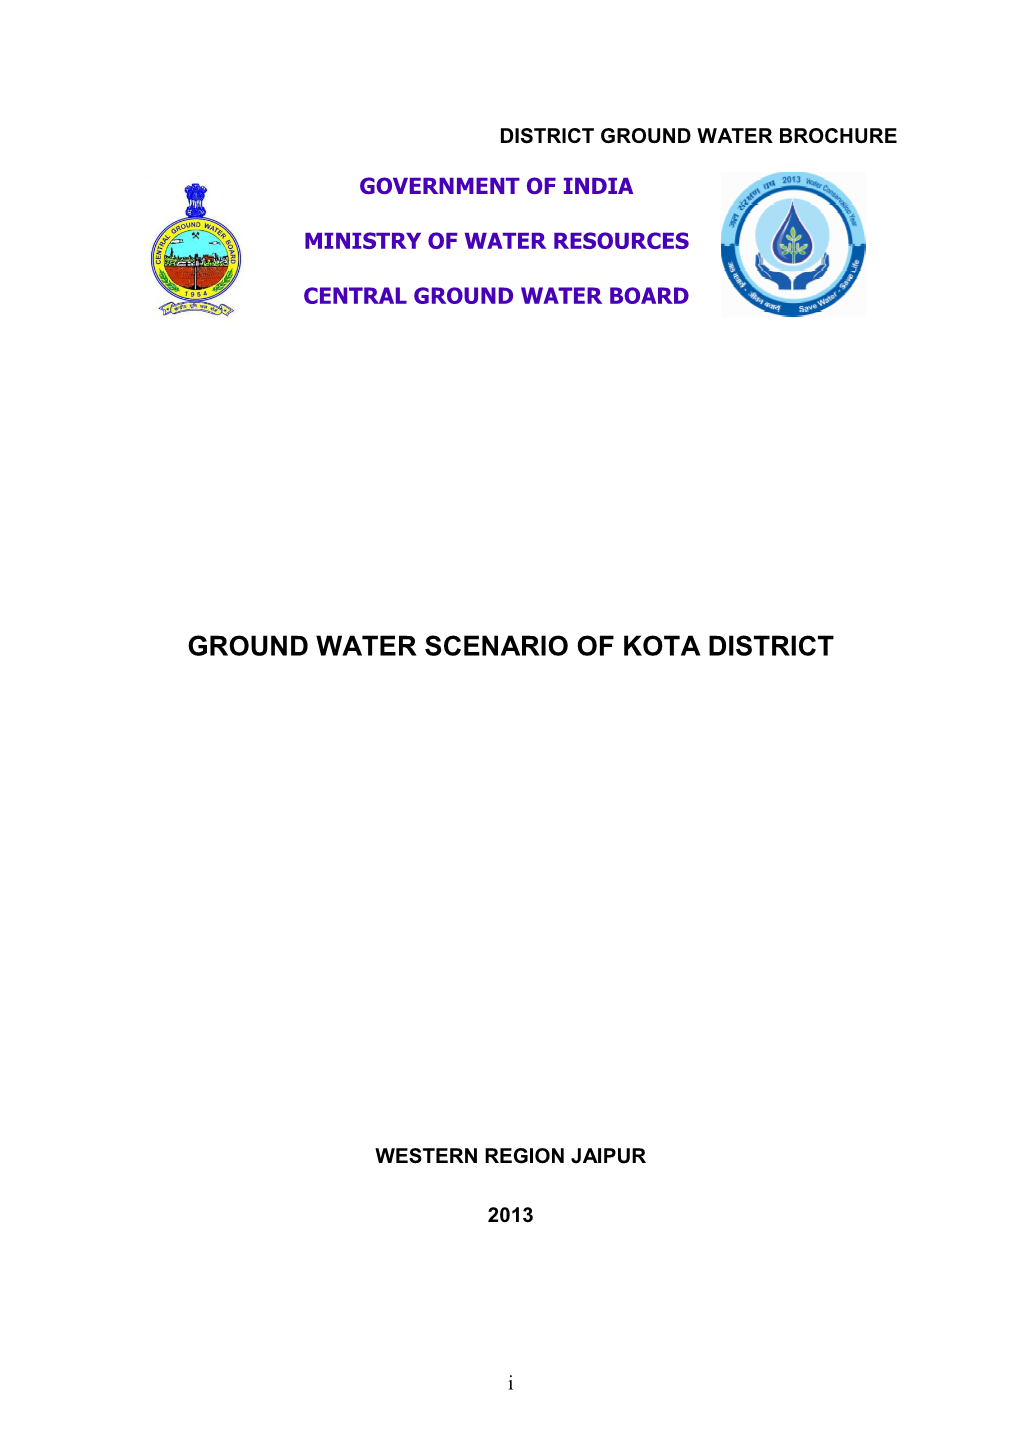 Ground Water Scenario of Kota District